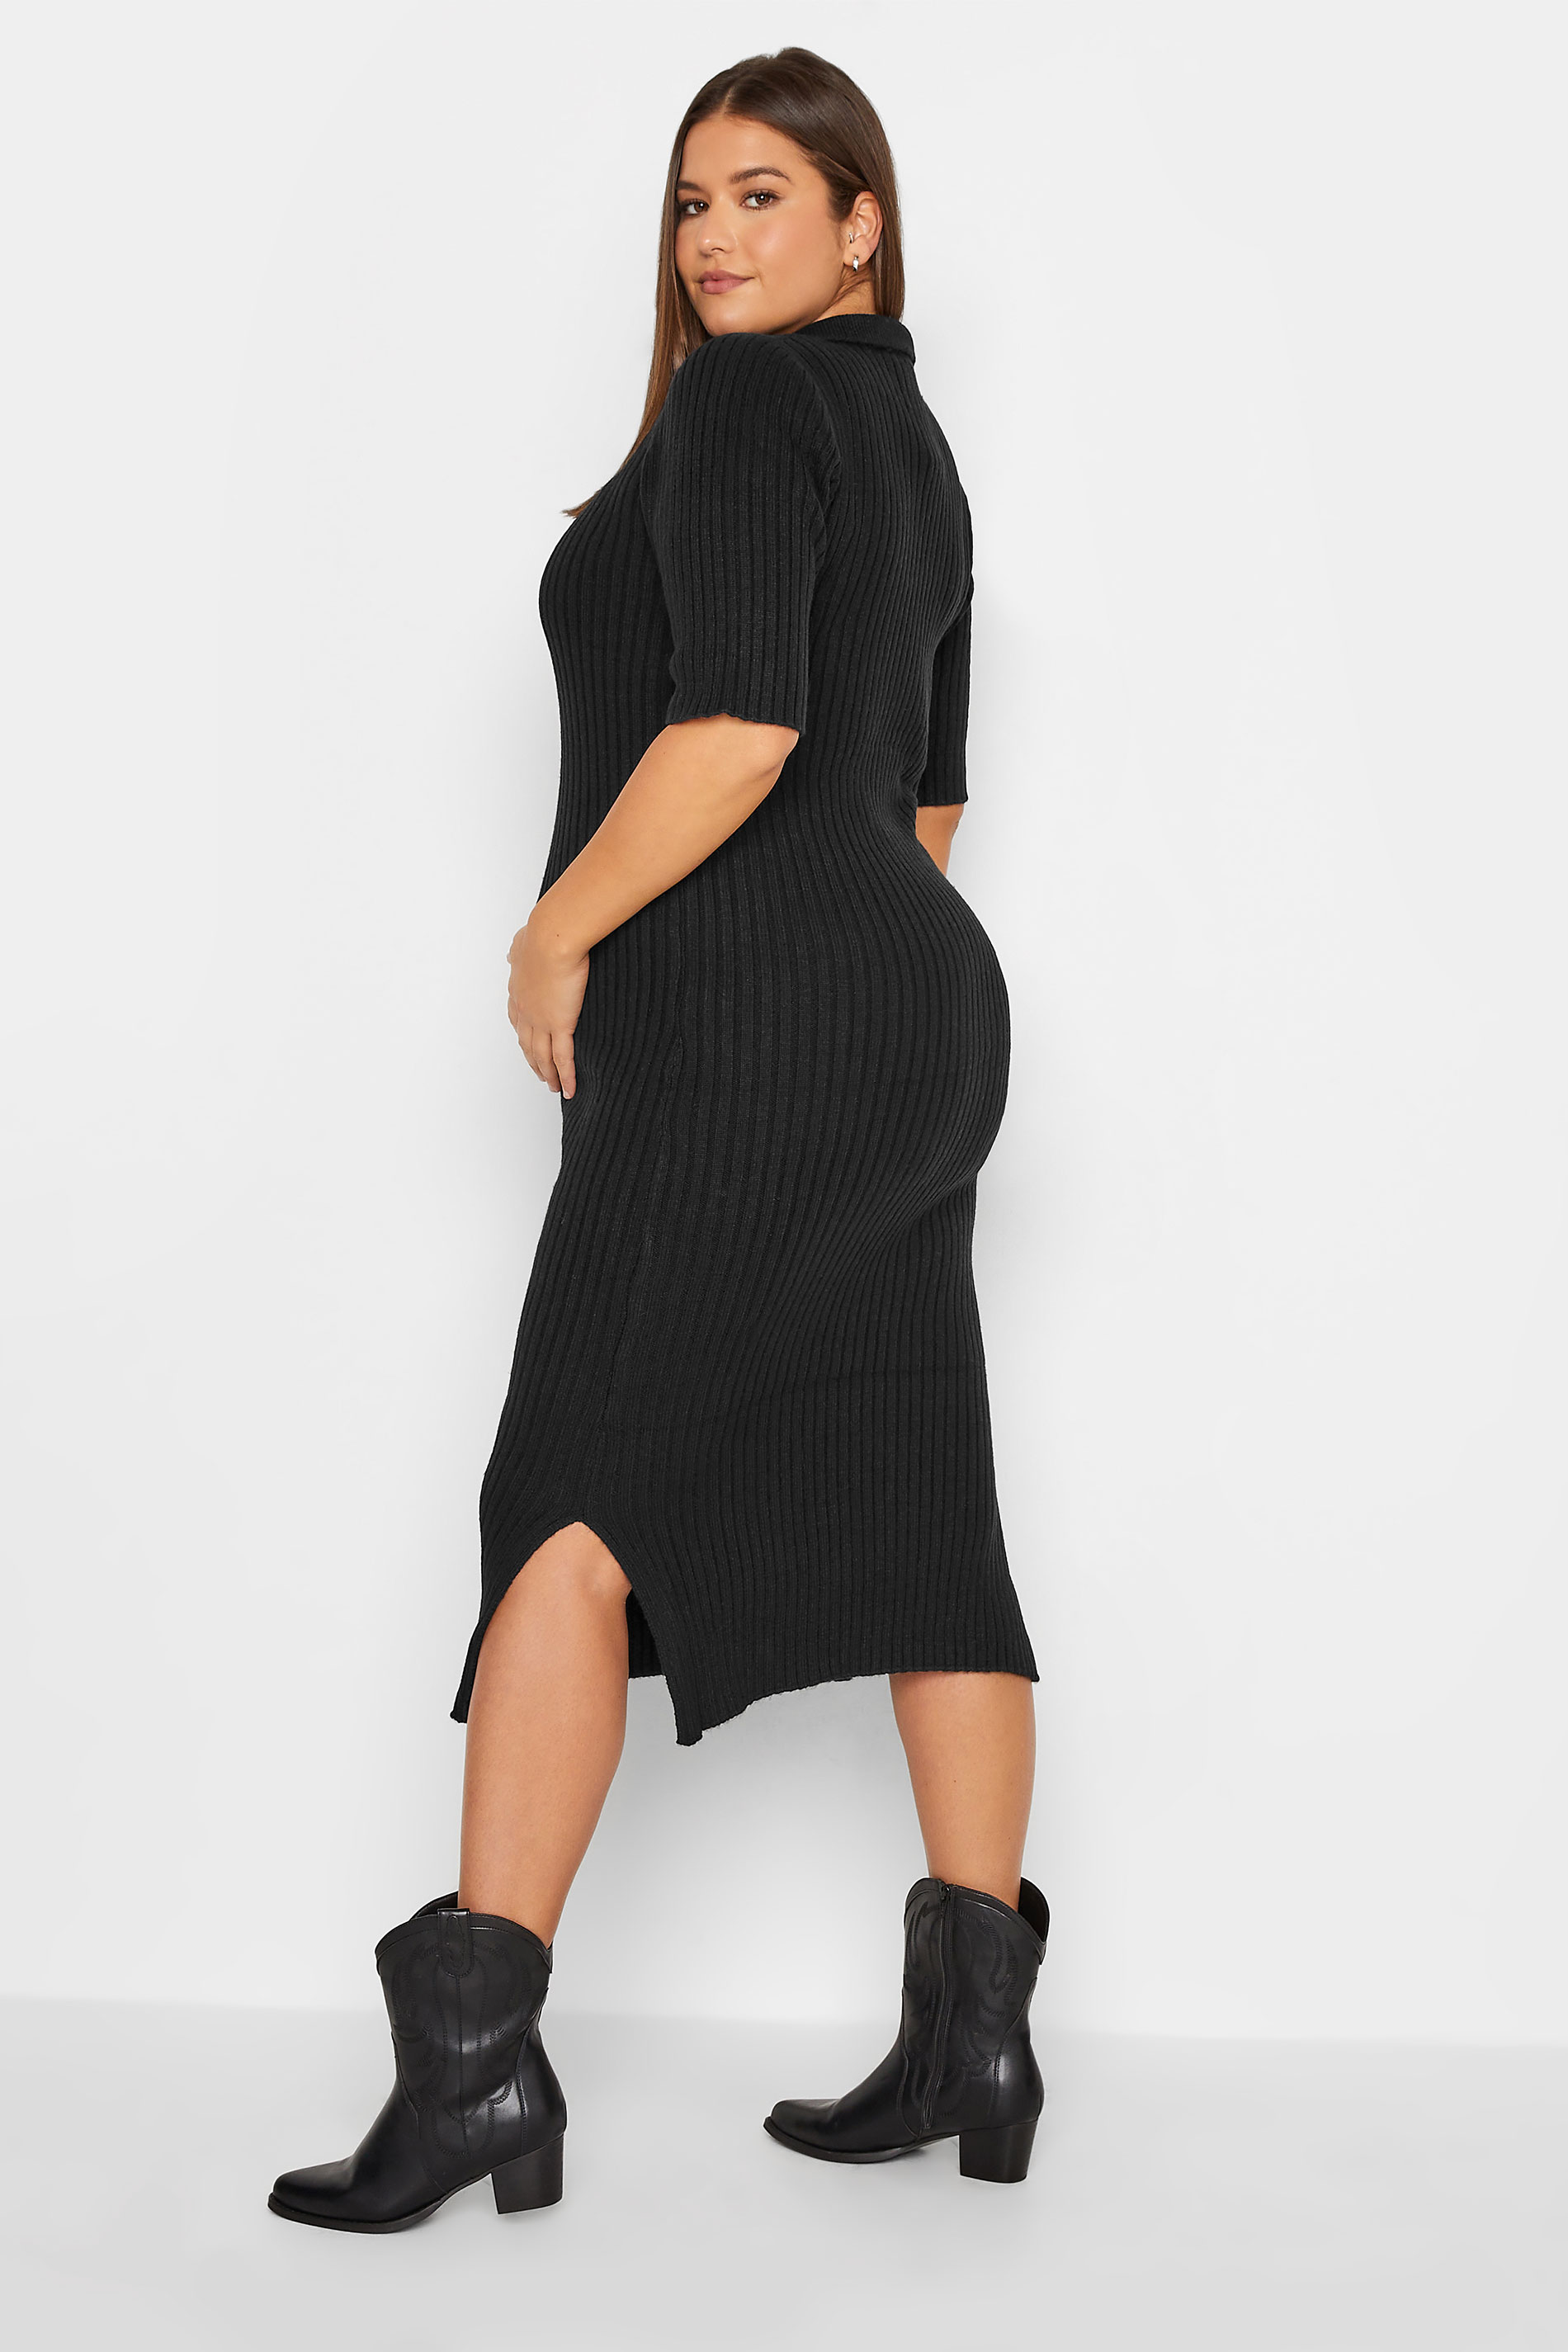 LTS Tall Women's Maternity Black Knitted Midaxi Dress | Long Tall Sally  3